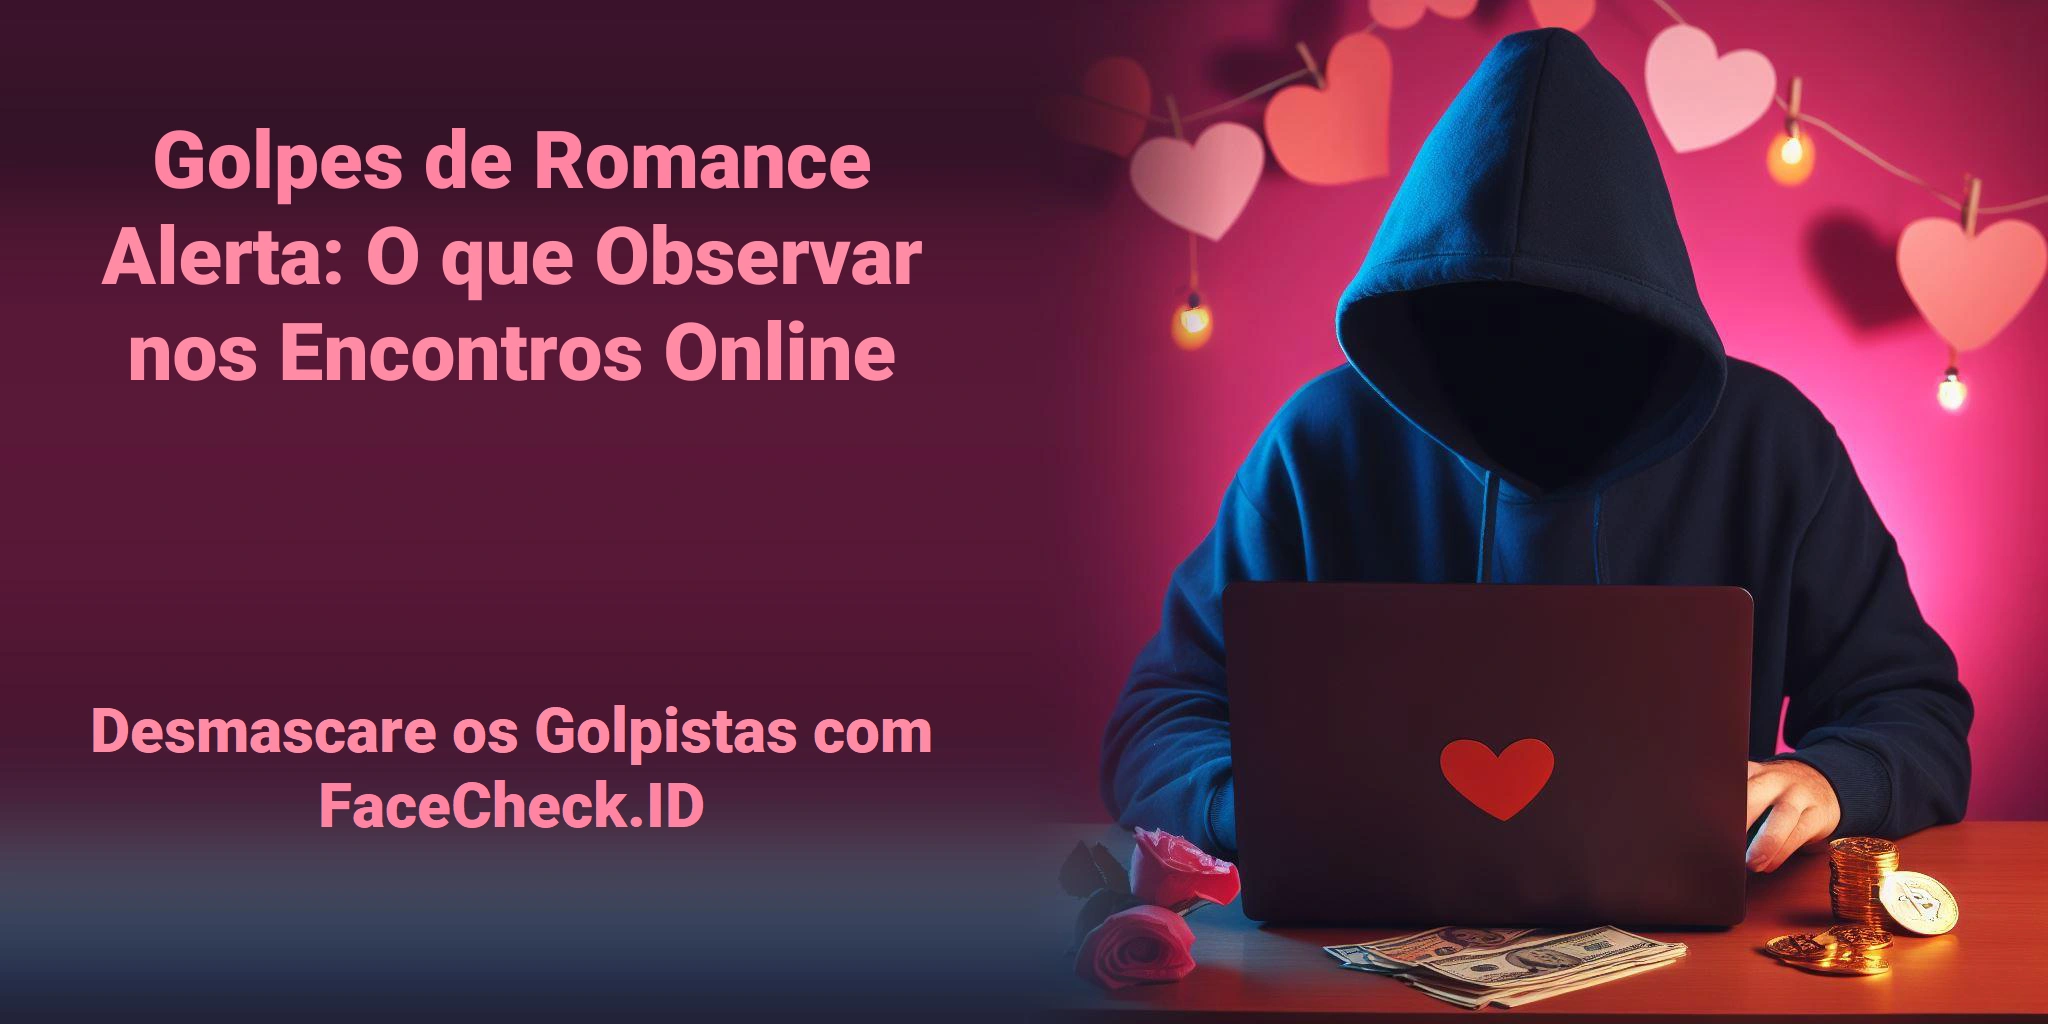 Golpes de Romance Alerta: O que Observar nos Encontros Online Desmascare os Golpistas com FaceCheck.ID